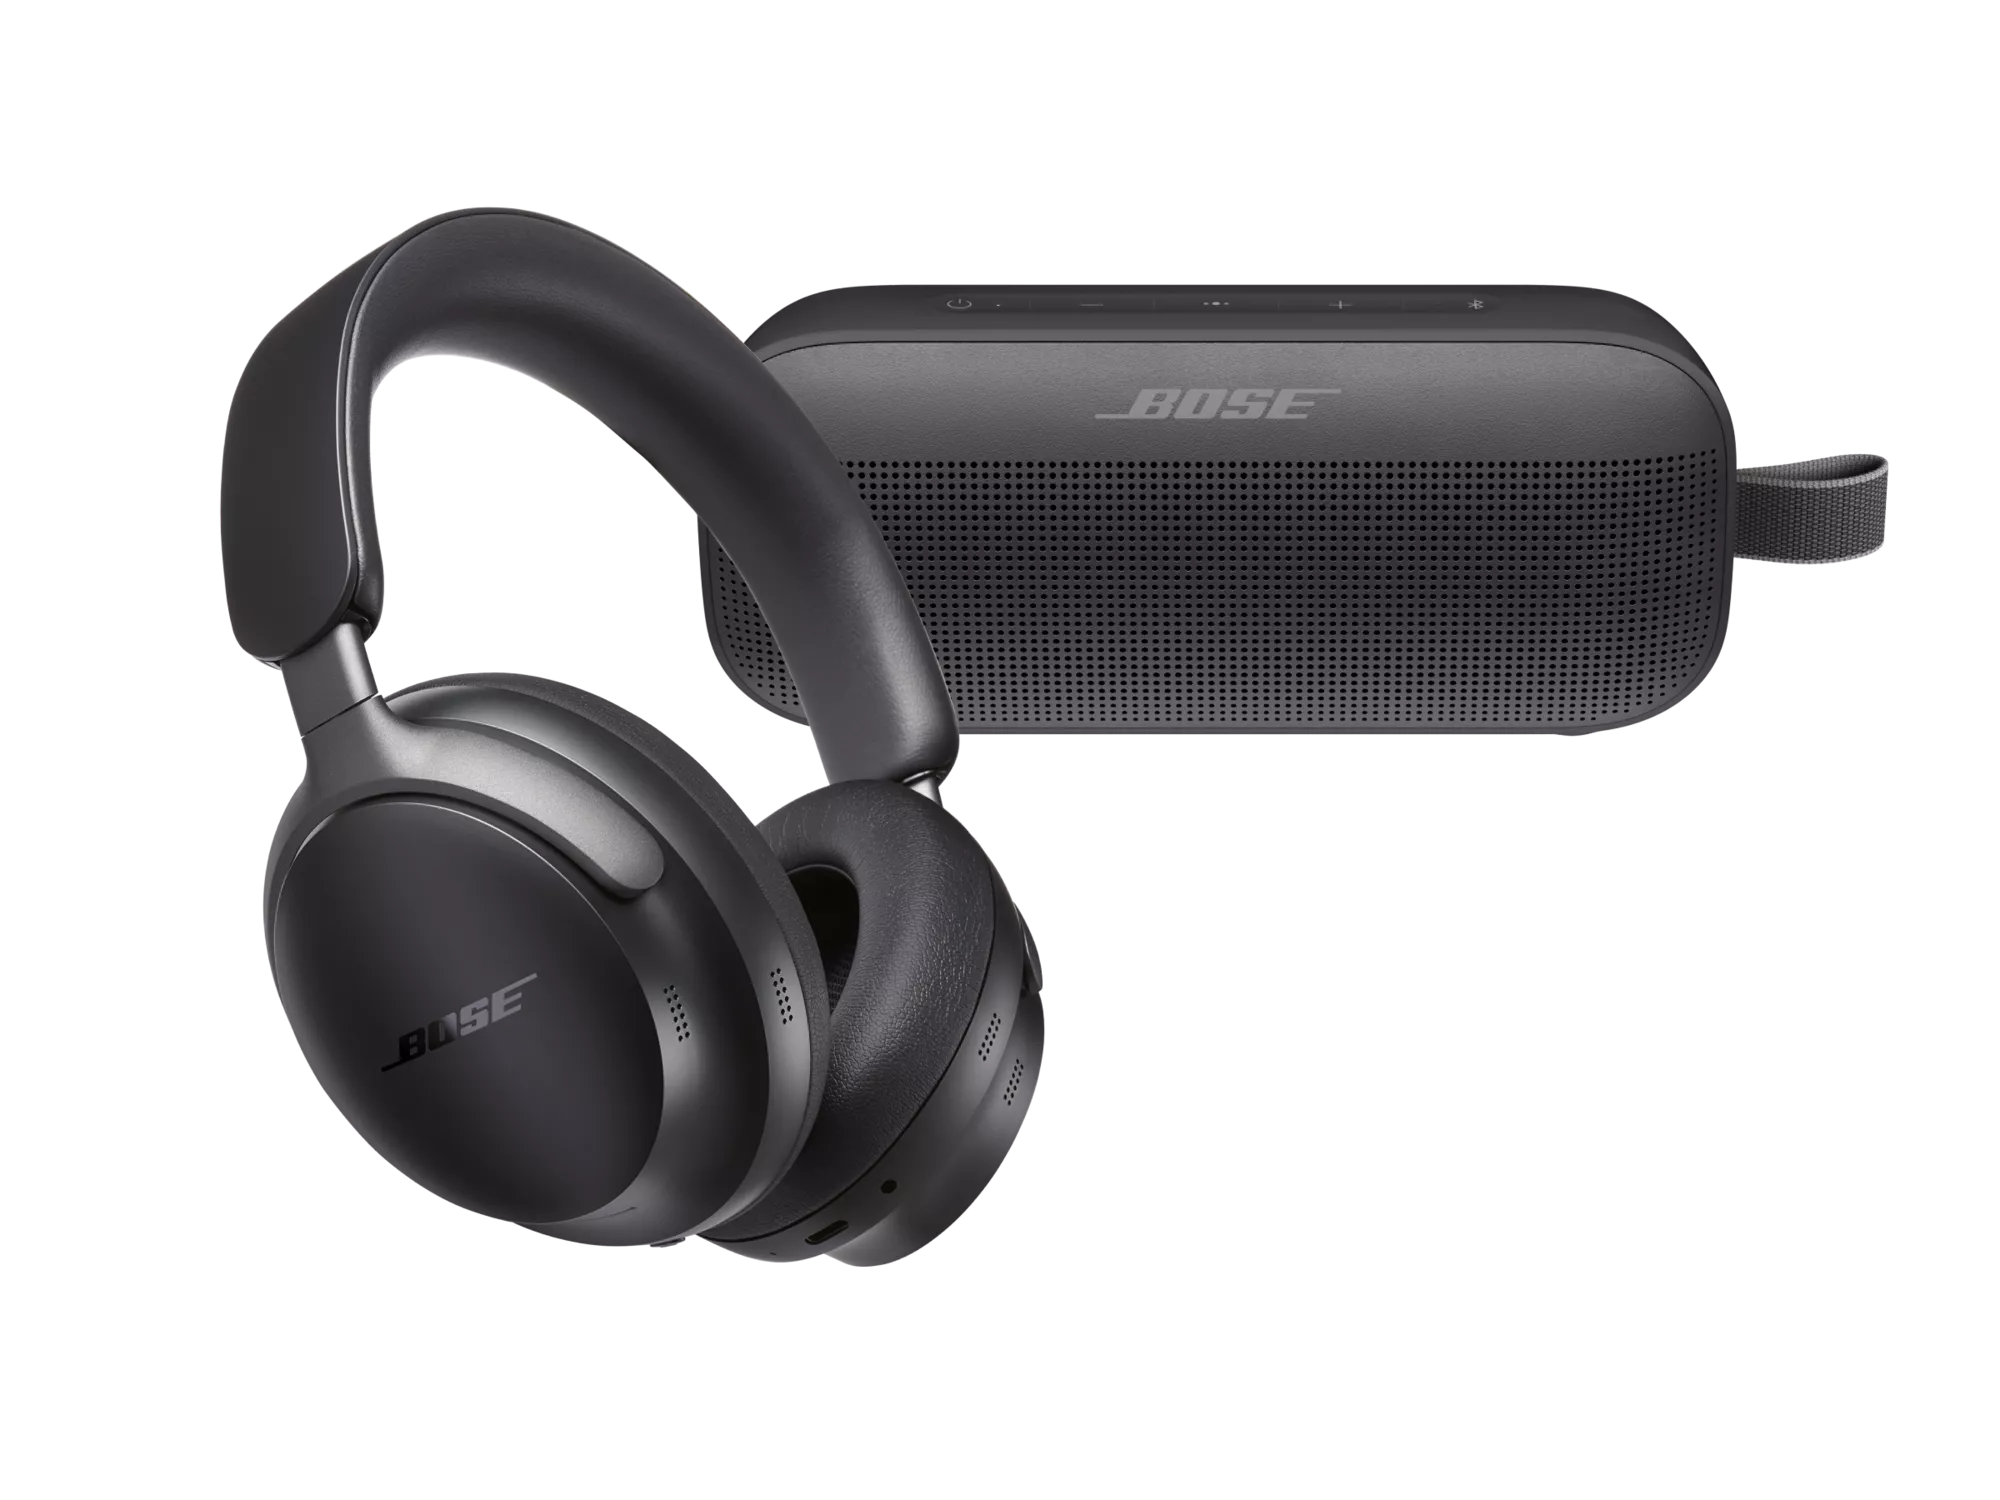 Altavoz Bluetooth Bose SoundLink Flex. Garantía oficial. Envío